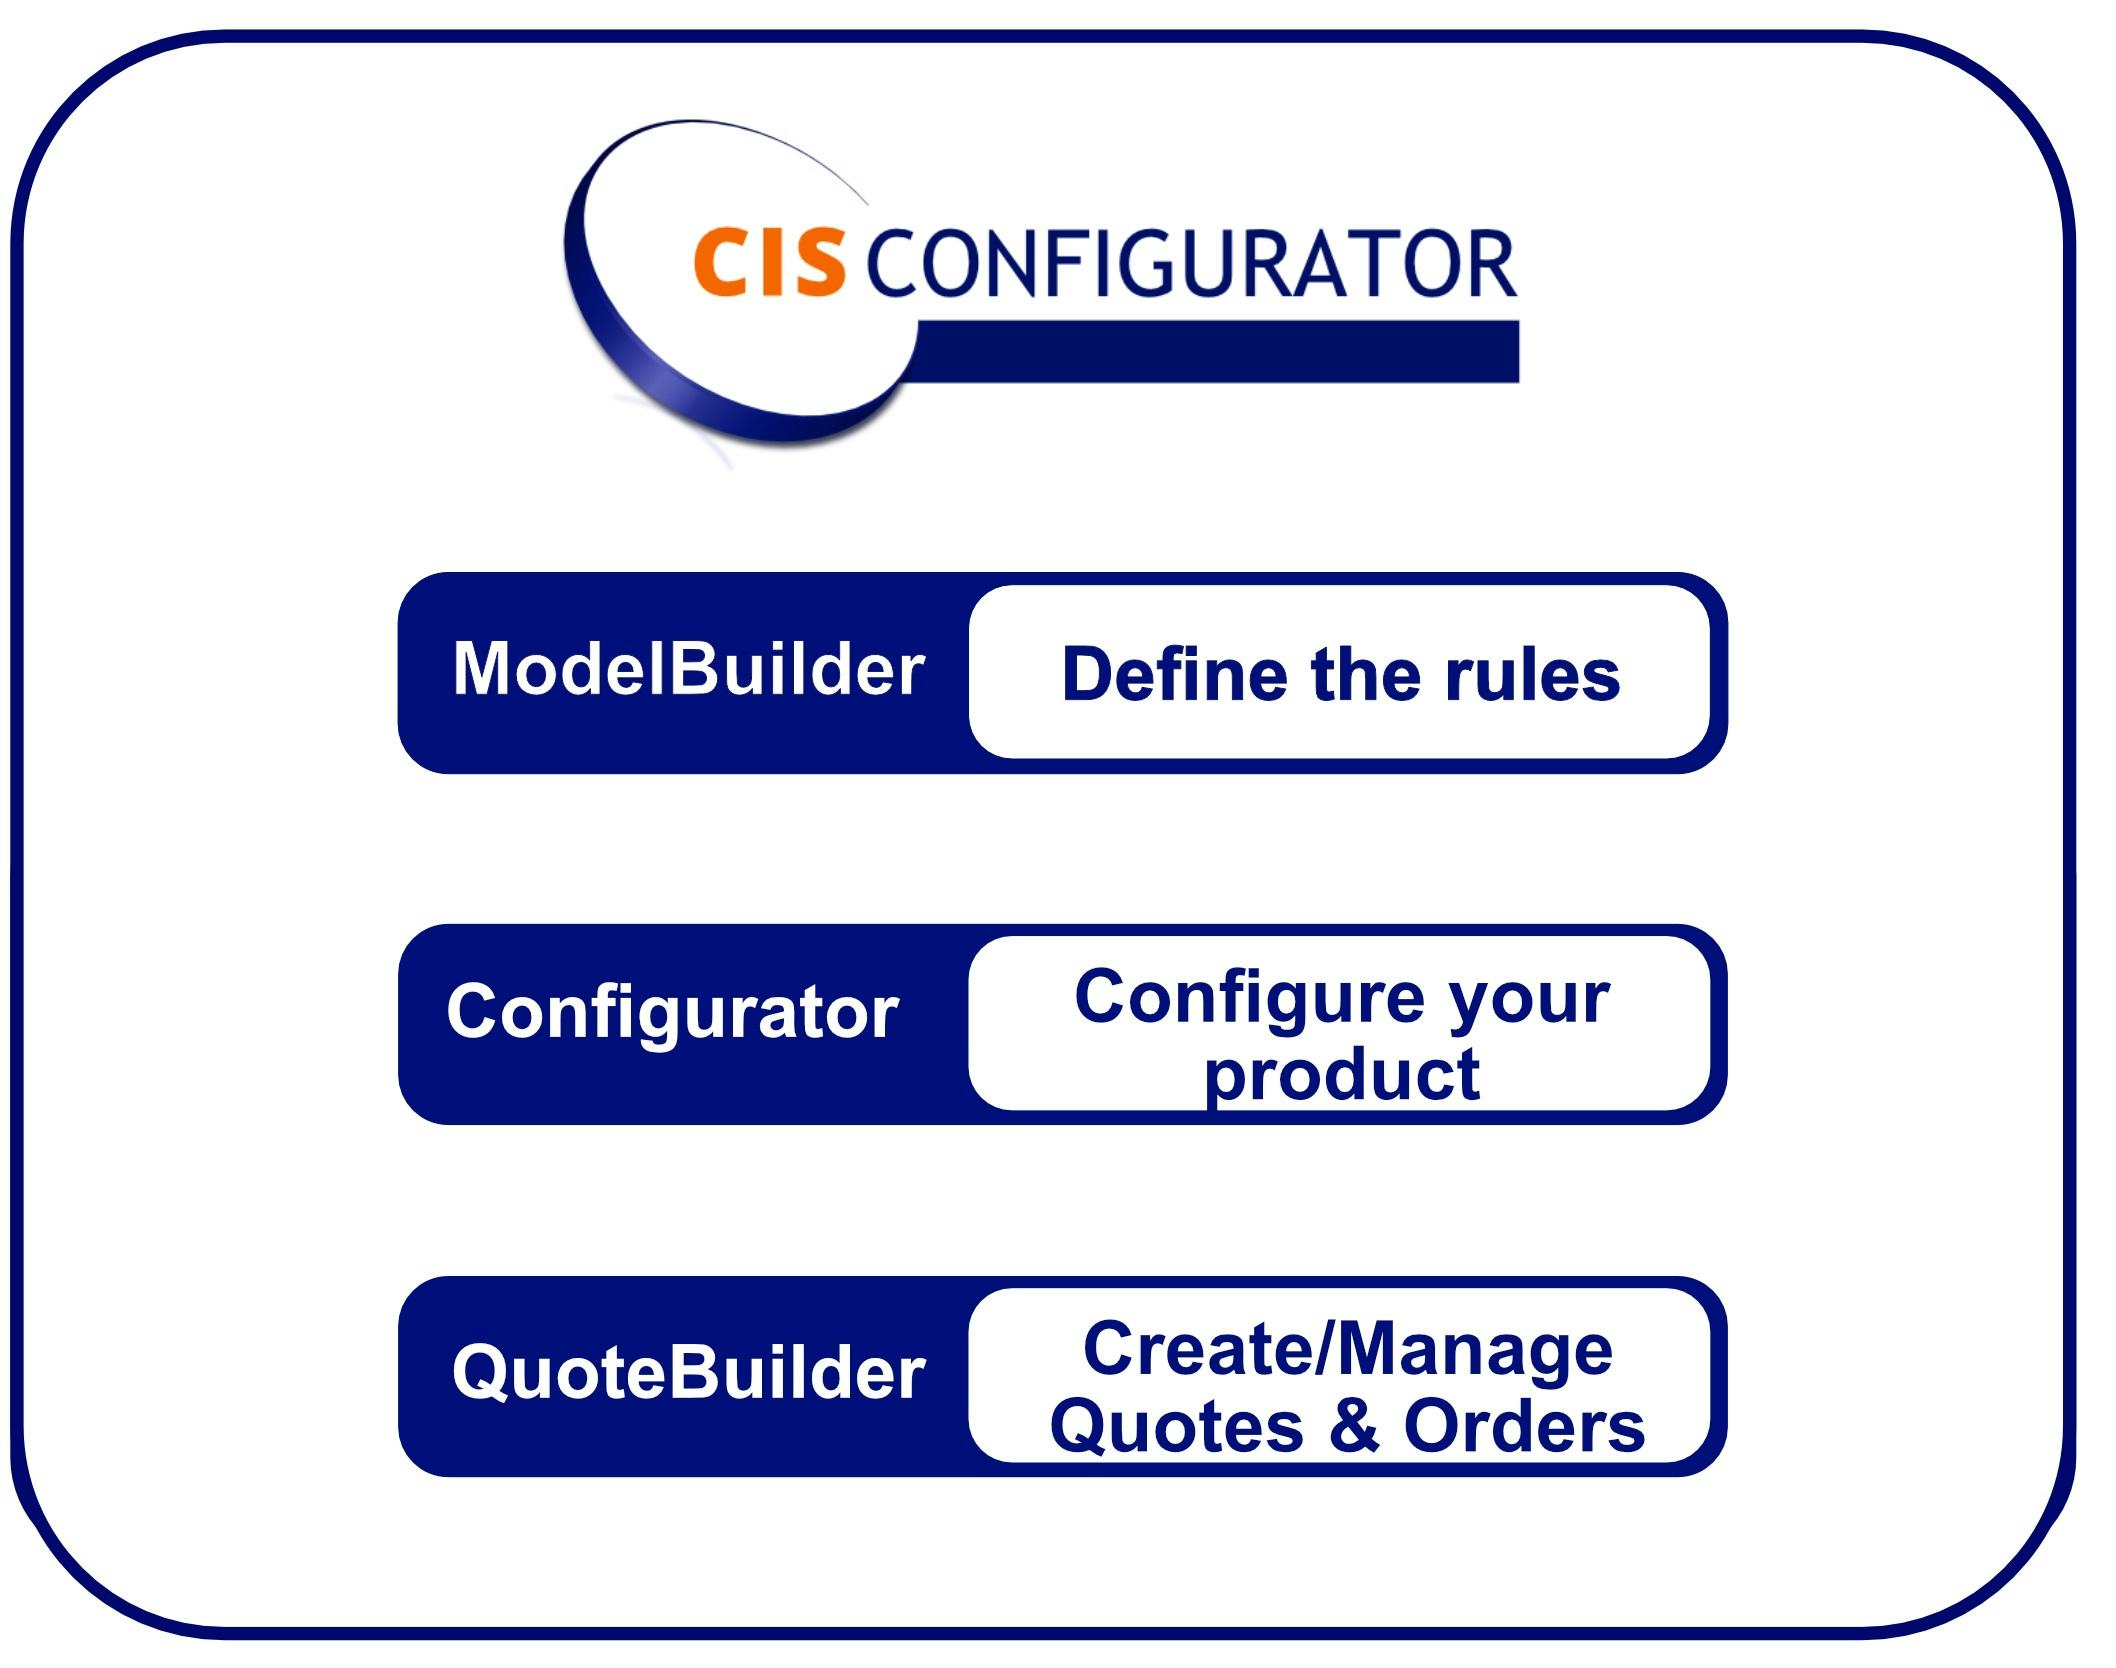 CIS Configurator